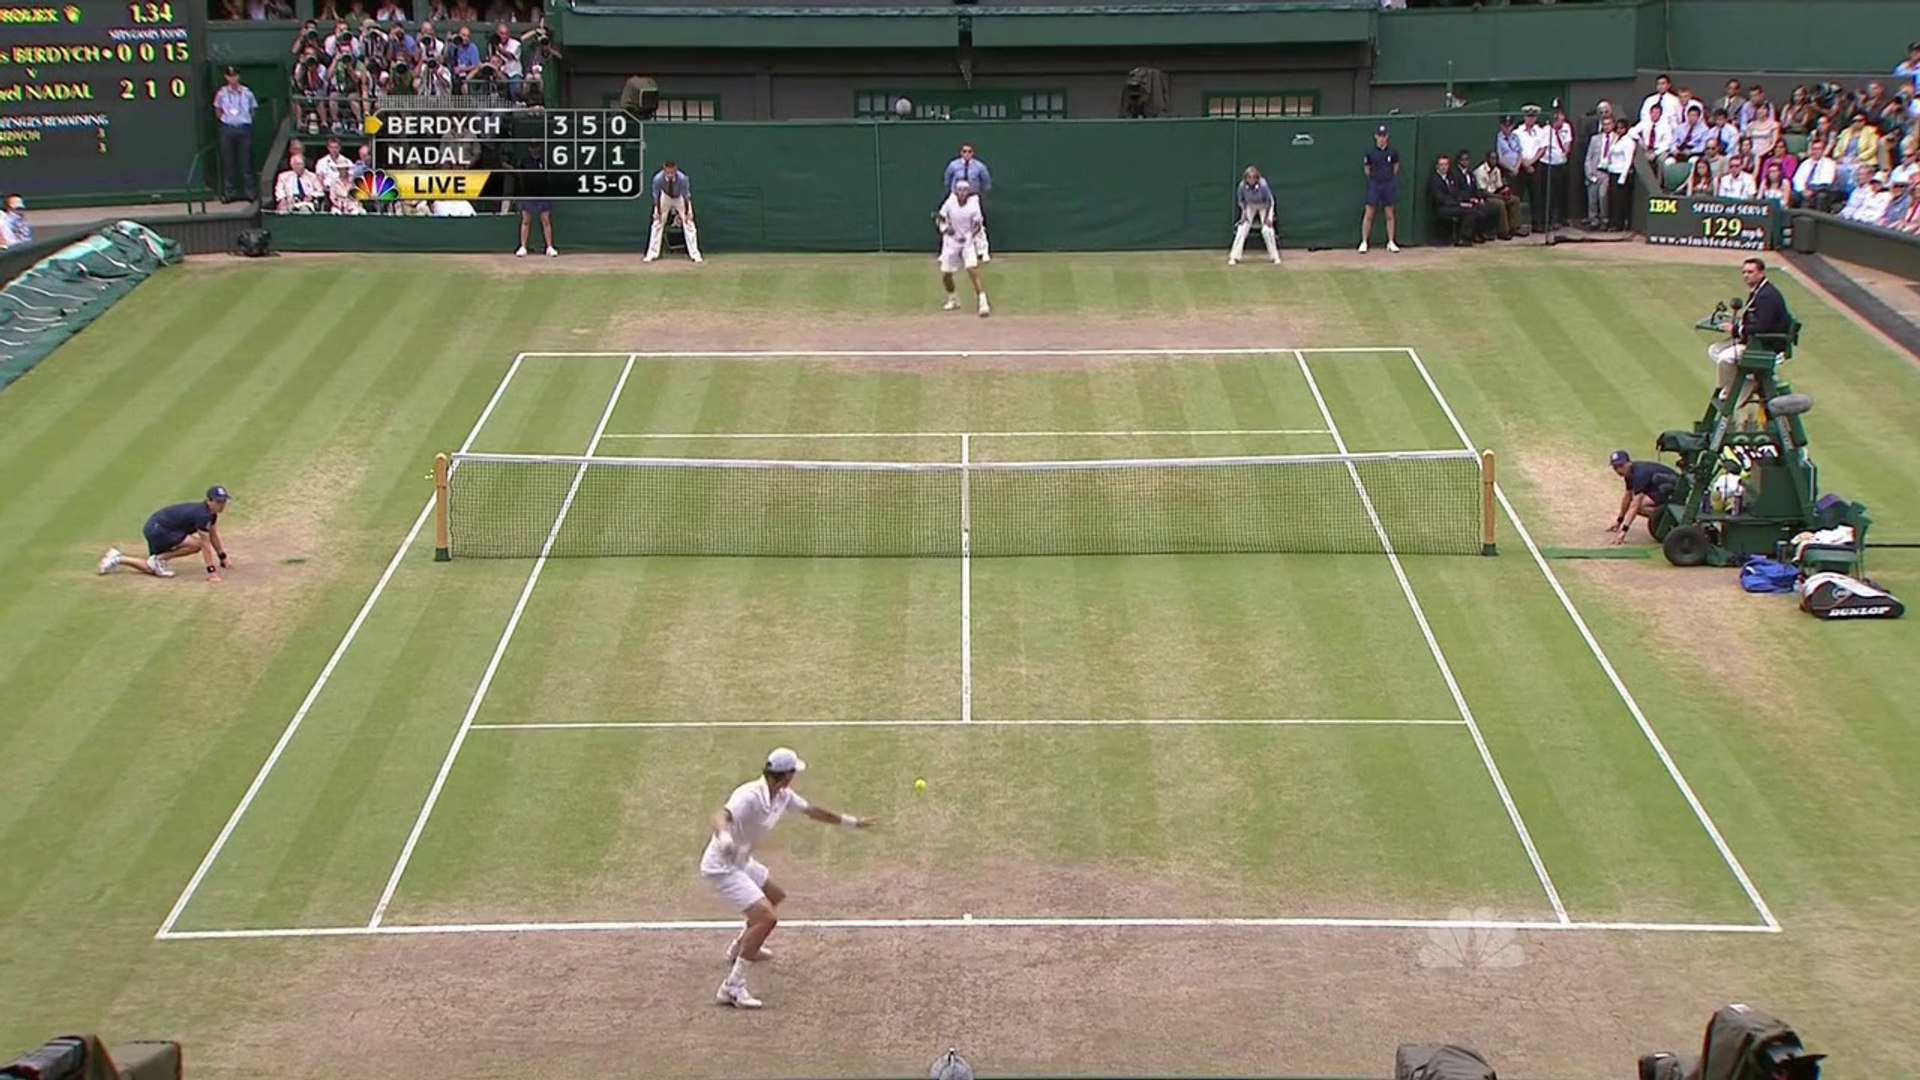 2010-07-05 Wimbledon Final - Nadal vs Berdych (highlights HD)